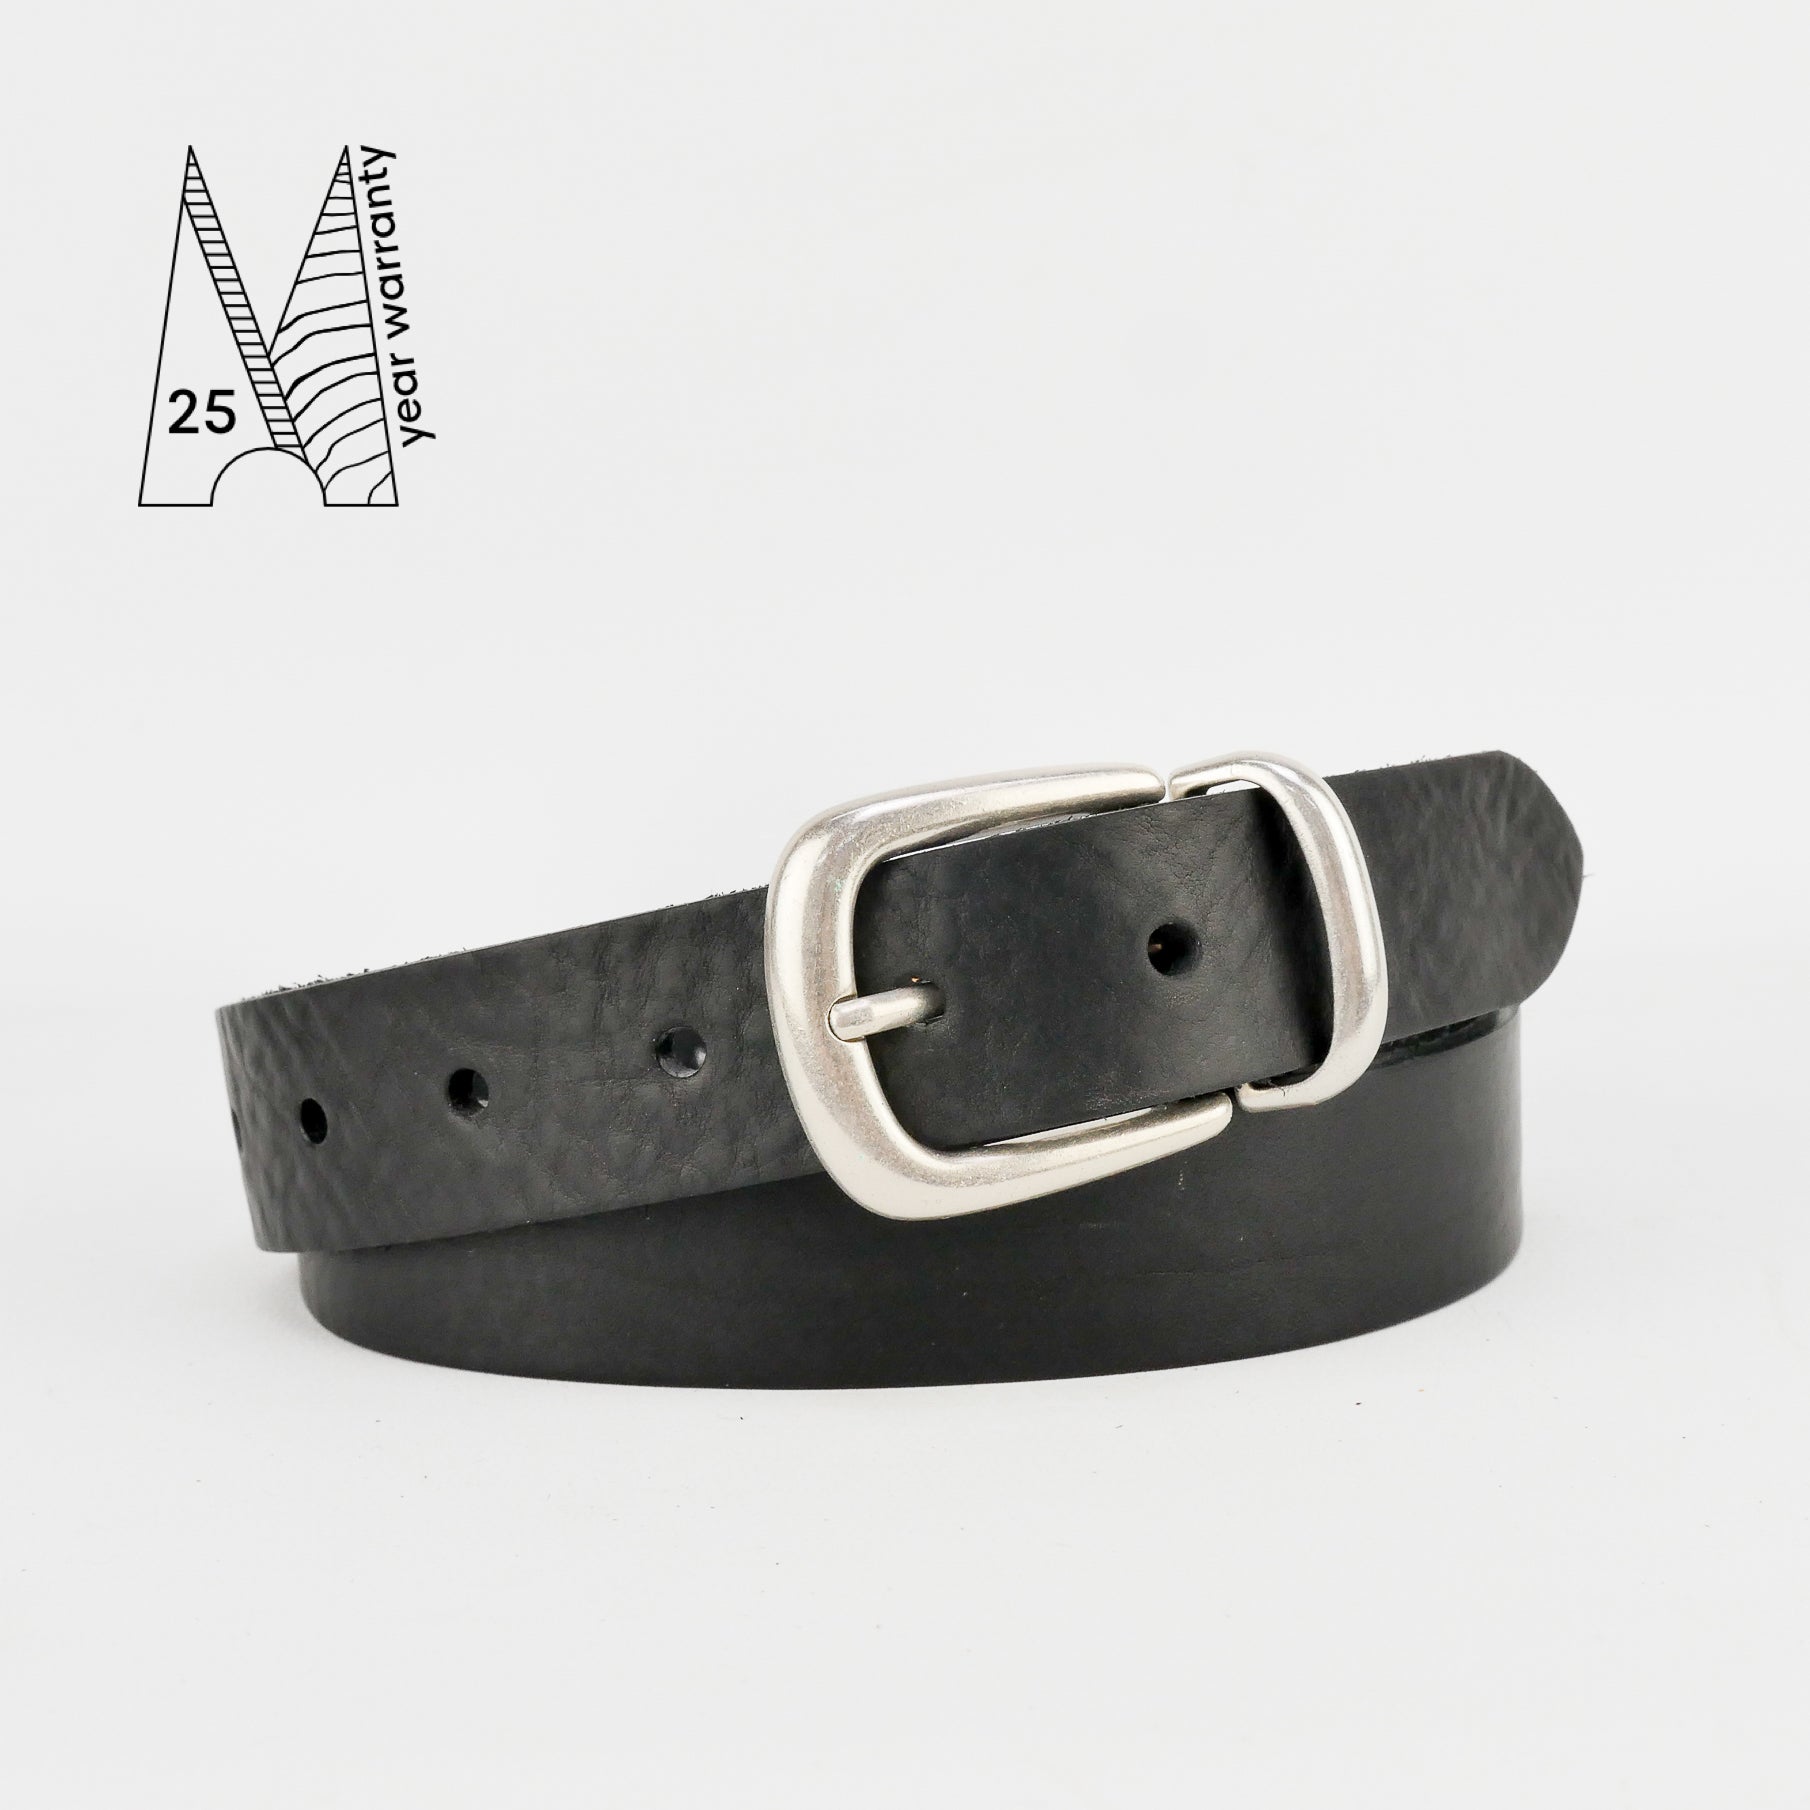 Buckle and Loop 1 1/8" Black Leather Belt